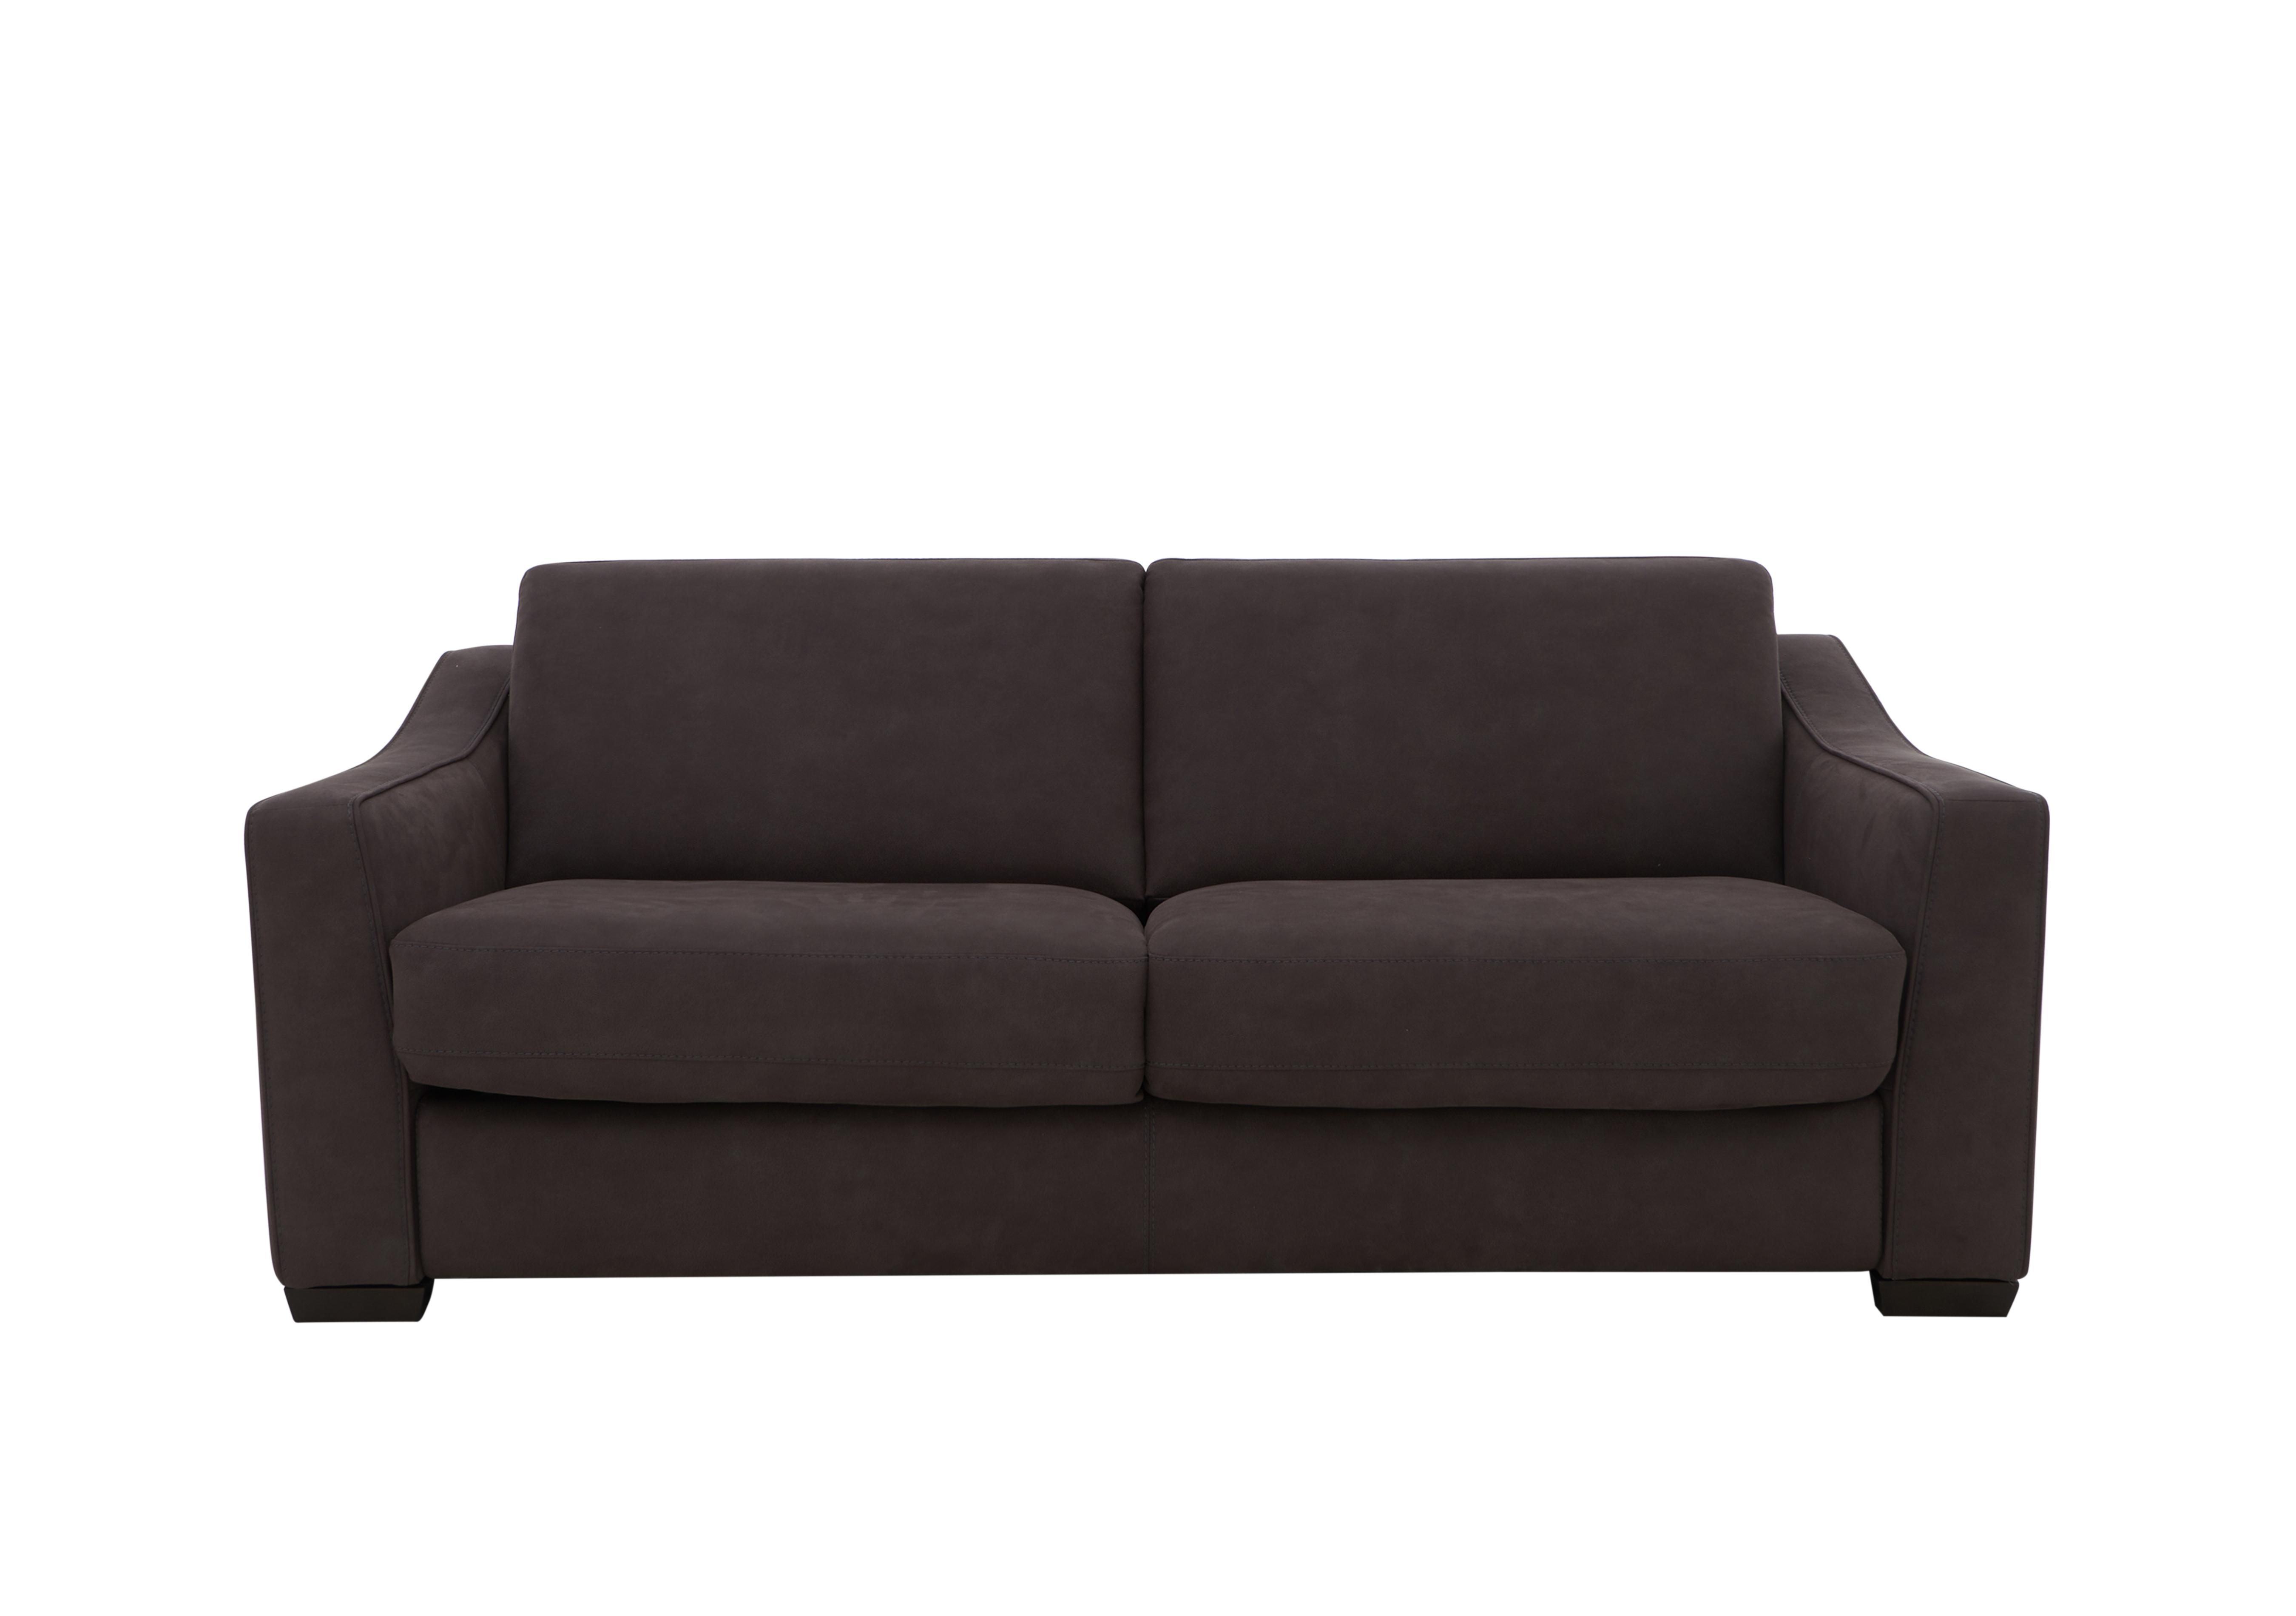 Optimus 3 Seater Fabric Sofa in Bfa-Blj-R16 Grey on Furniture Village